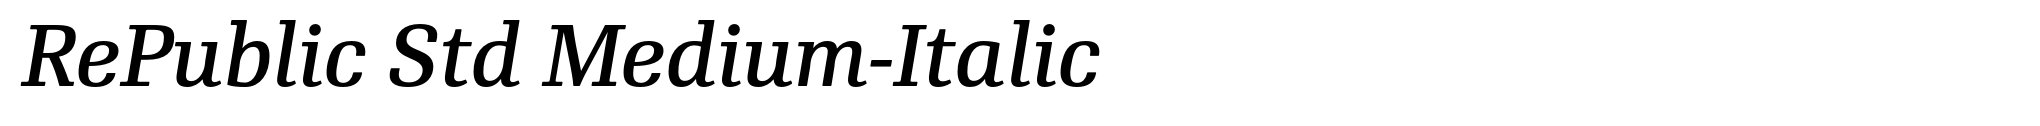 RePublic Std Medium-Italic image